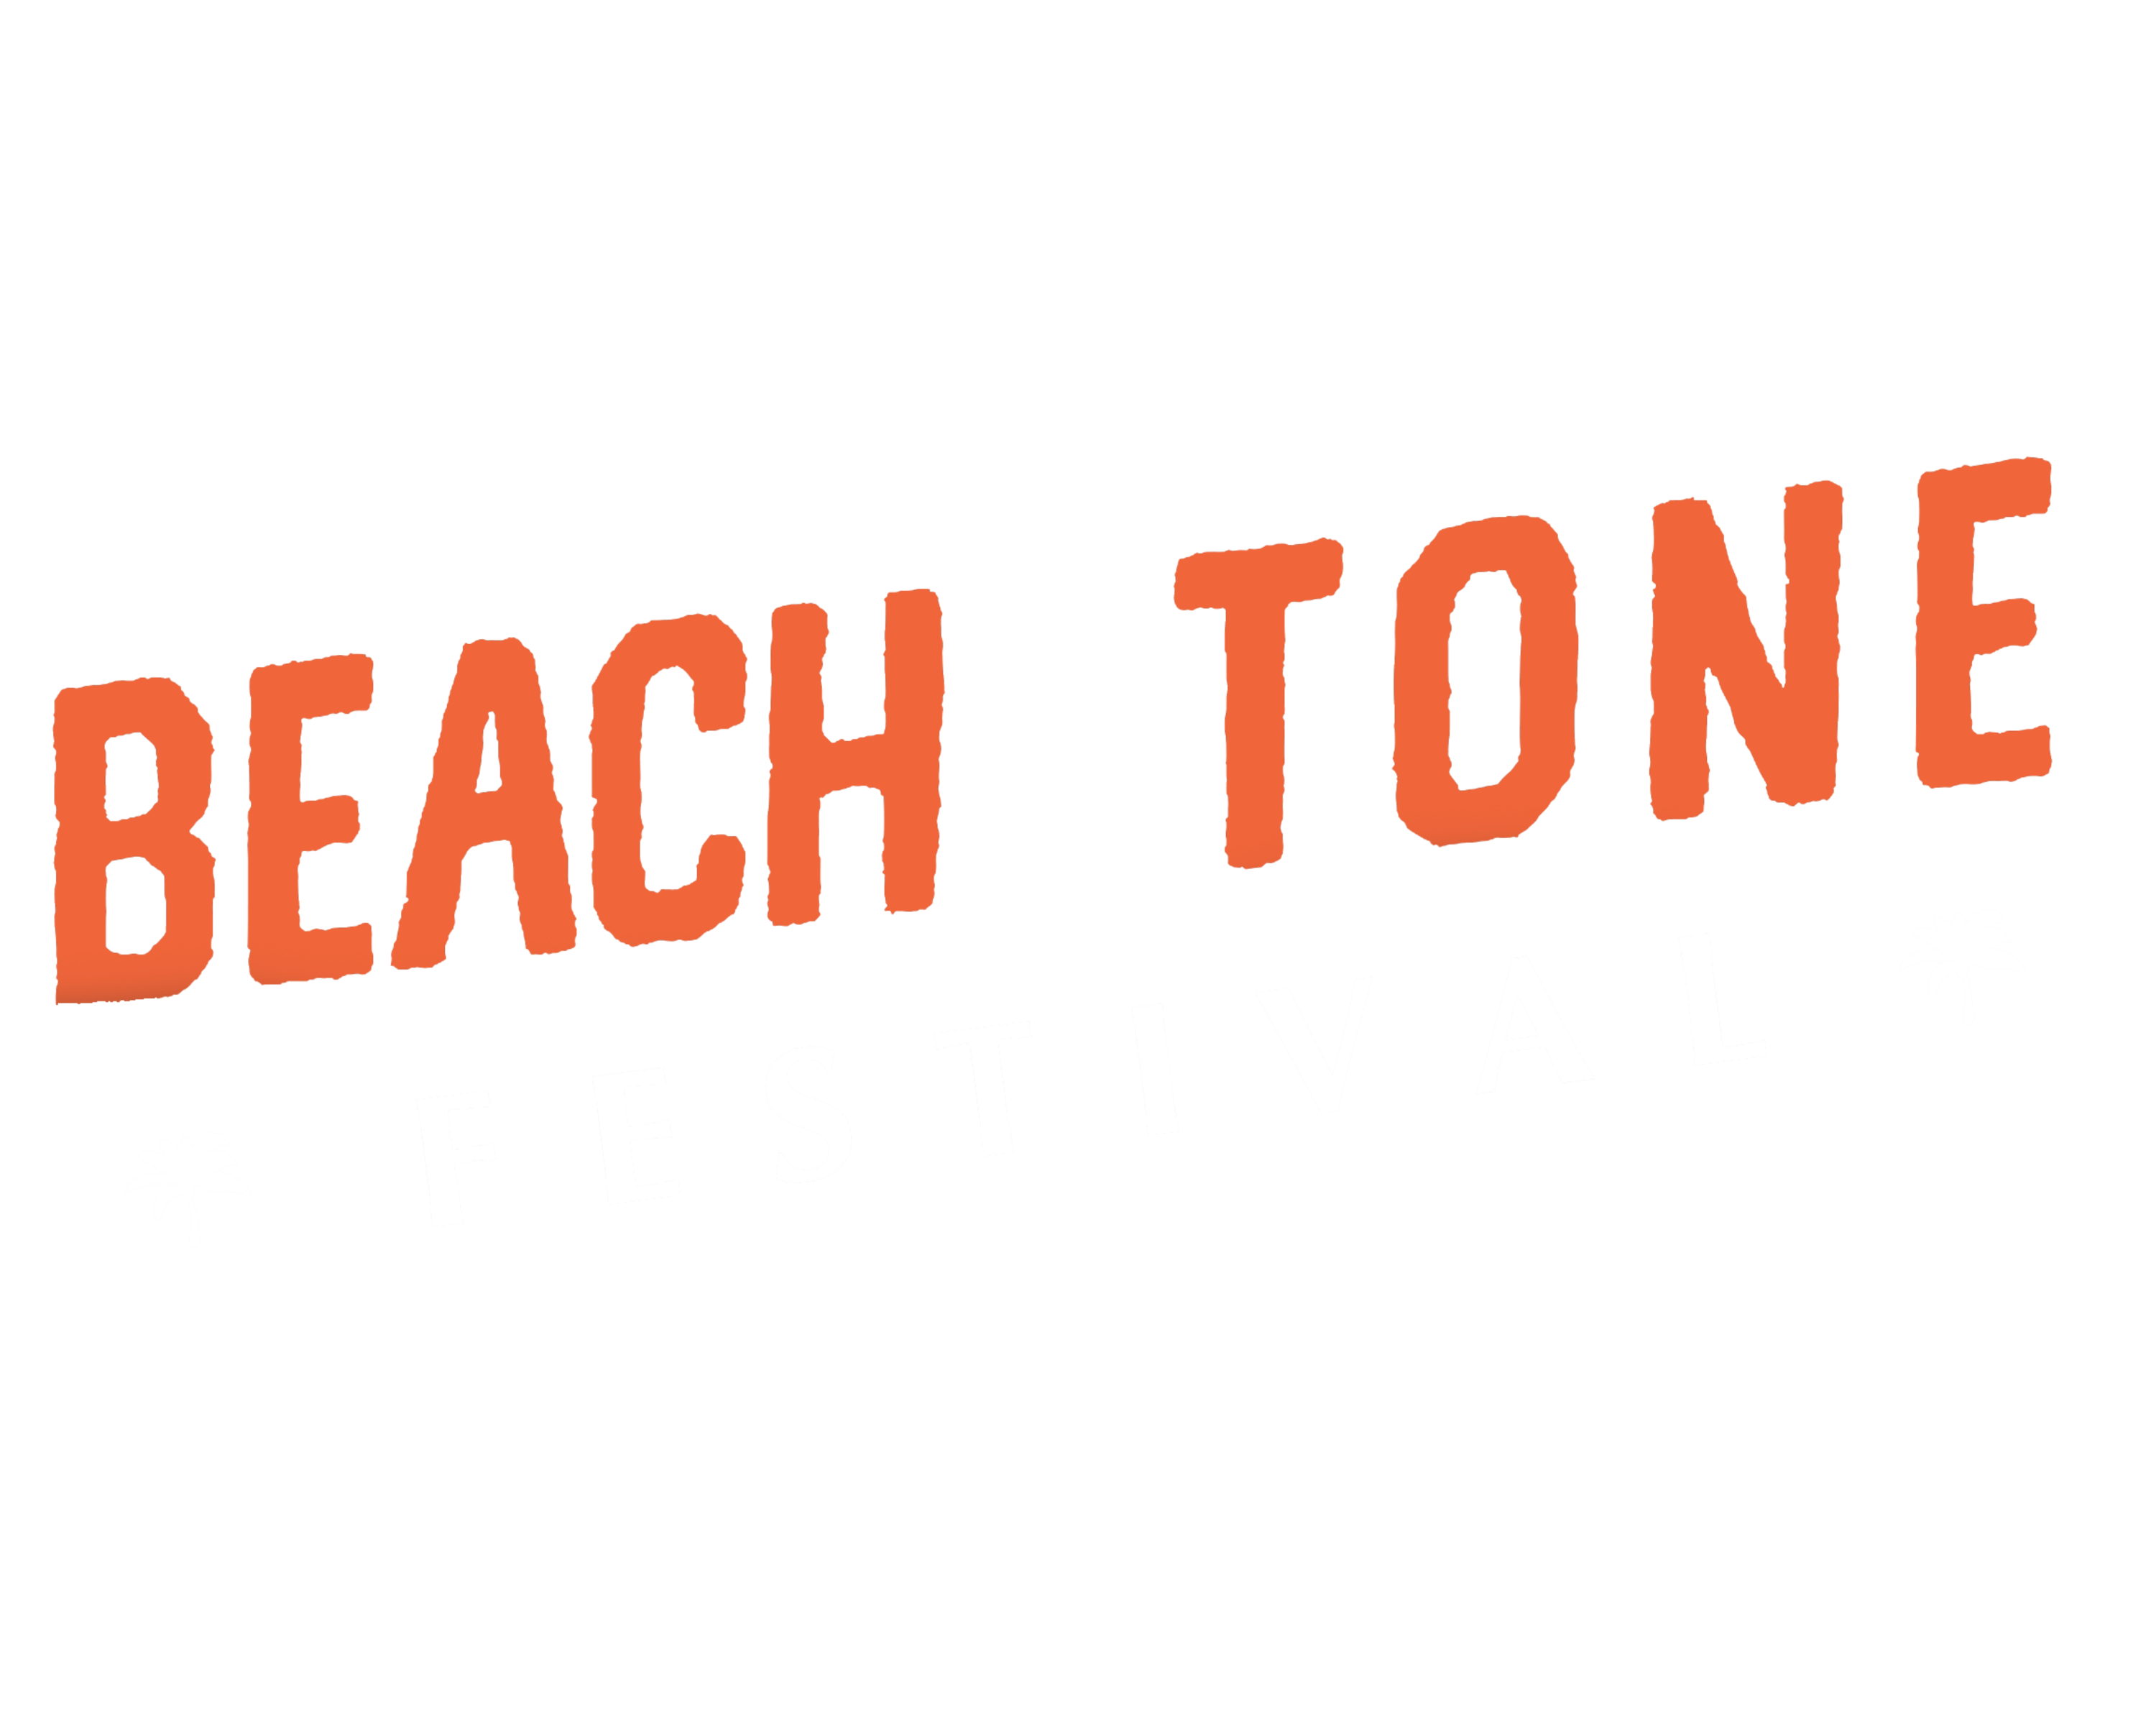 Beachtone Festival